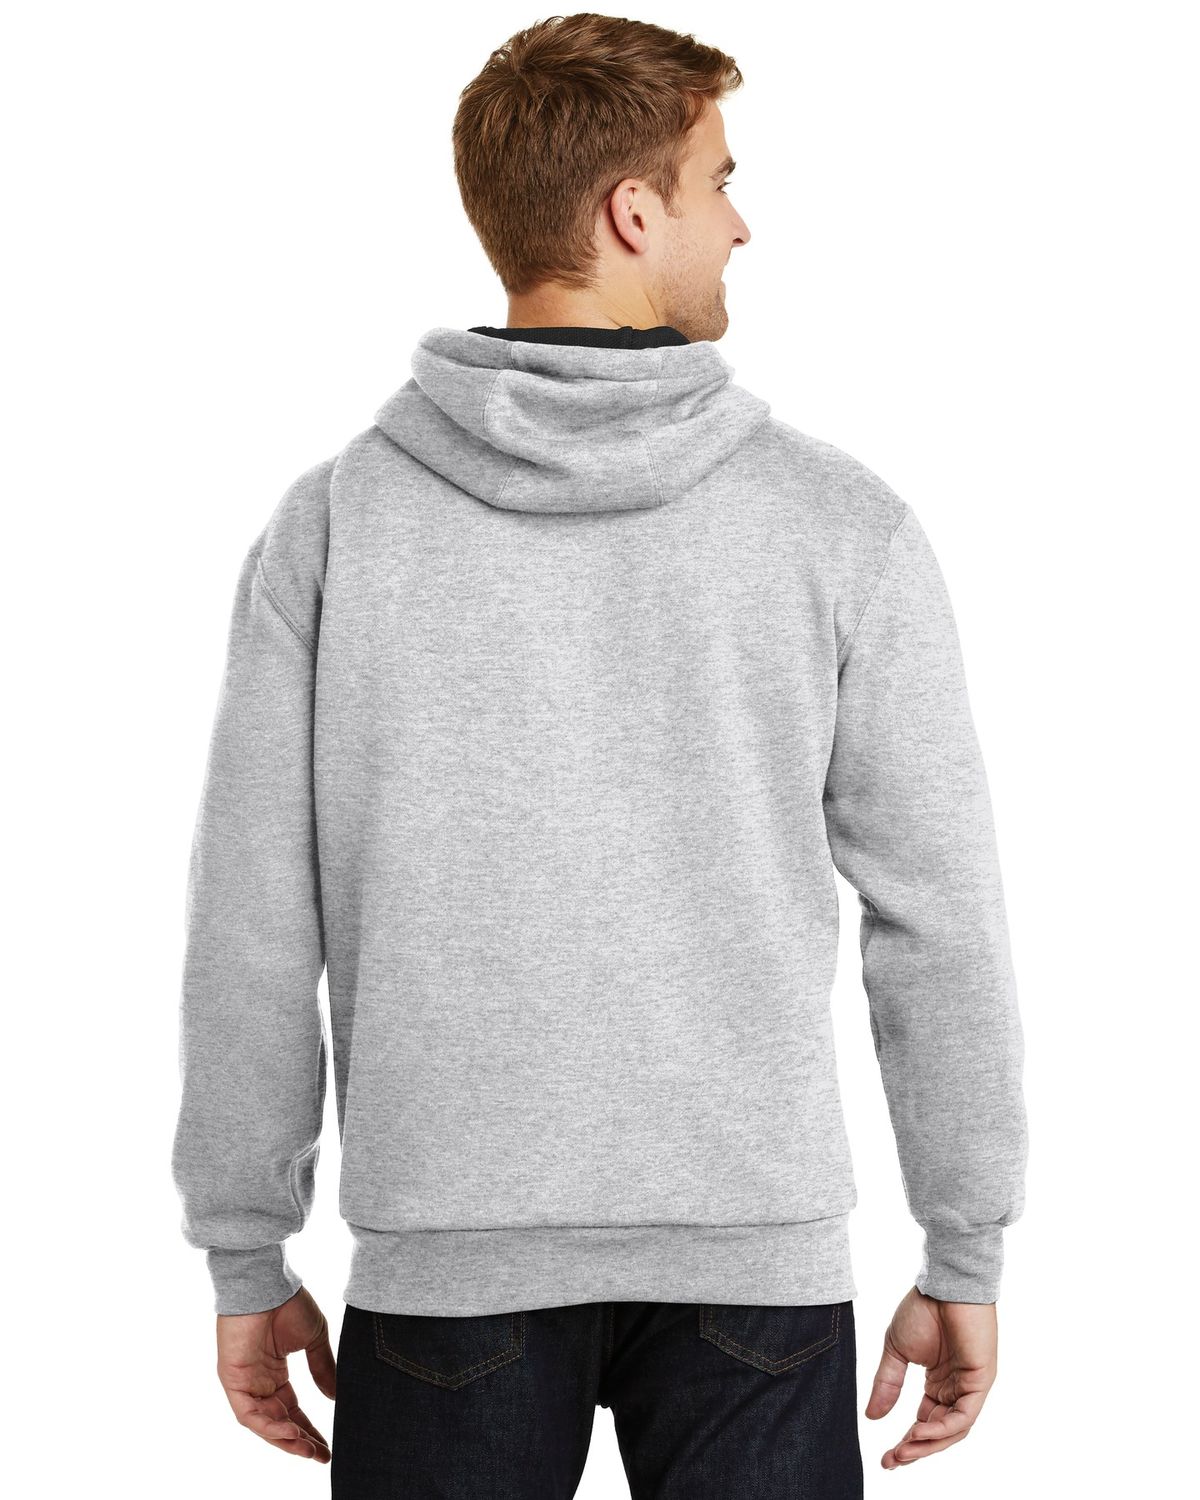 'CornerStone CS620 Full Zip with Thermal Lining Hooded Sweatshirt'